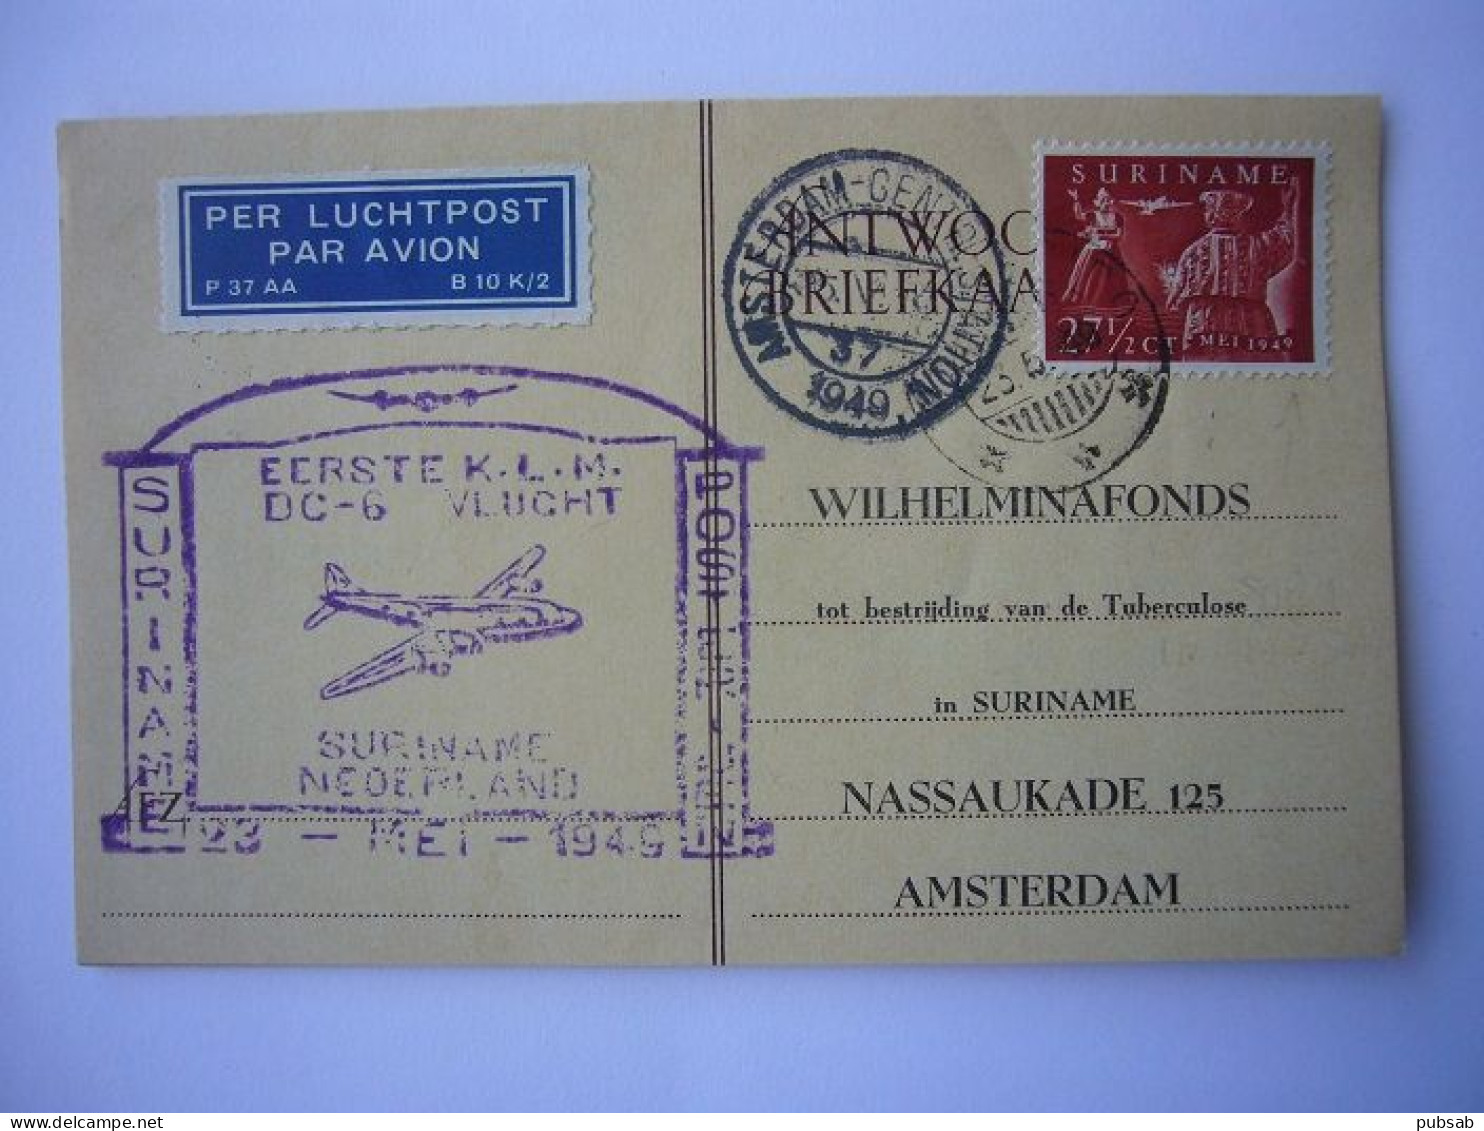 Avion / Airplane / KLM / DC-6 / First Flight Suriname - Nederland / May 23,1949 - 1946-....: Era Moderna